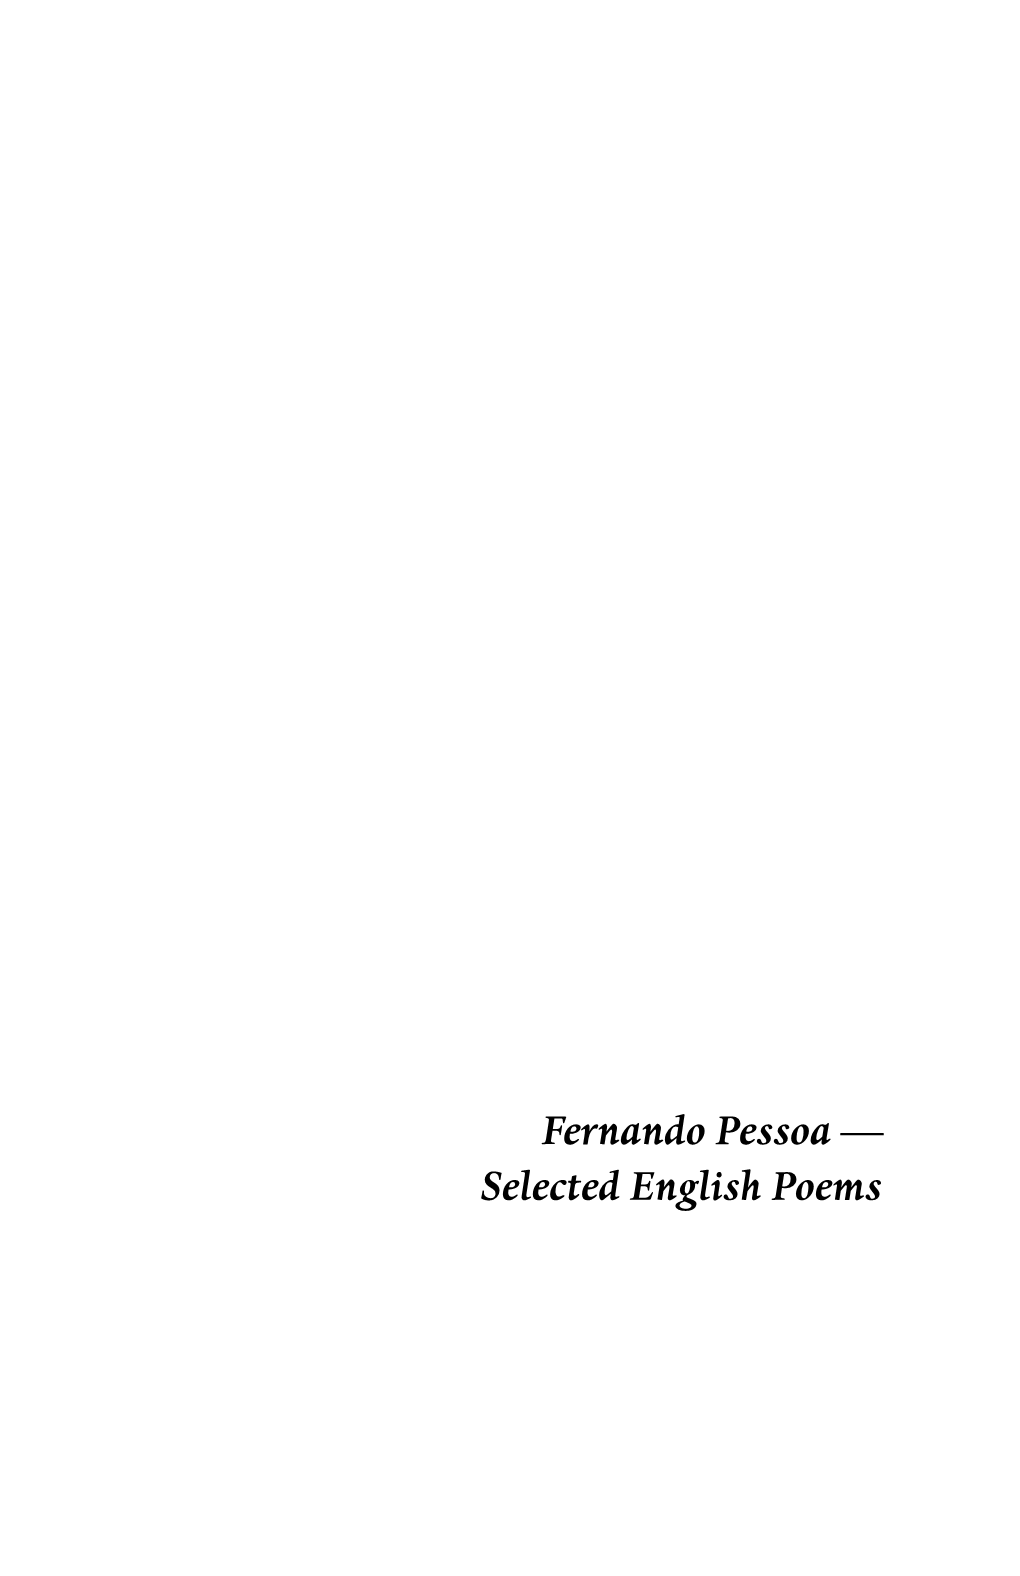 Fernando Pessoa — Selected English Poems the Pessoa Edition from Shearsman Books